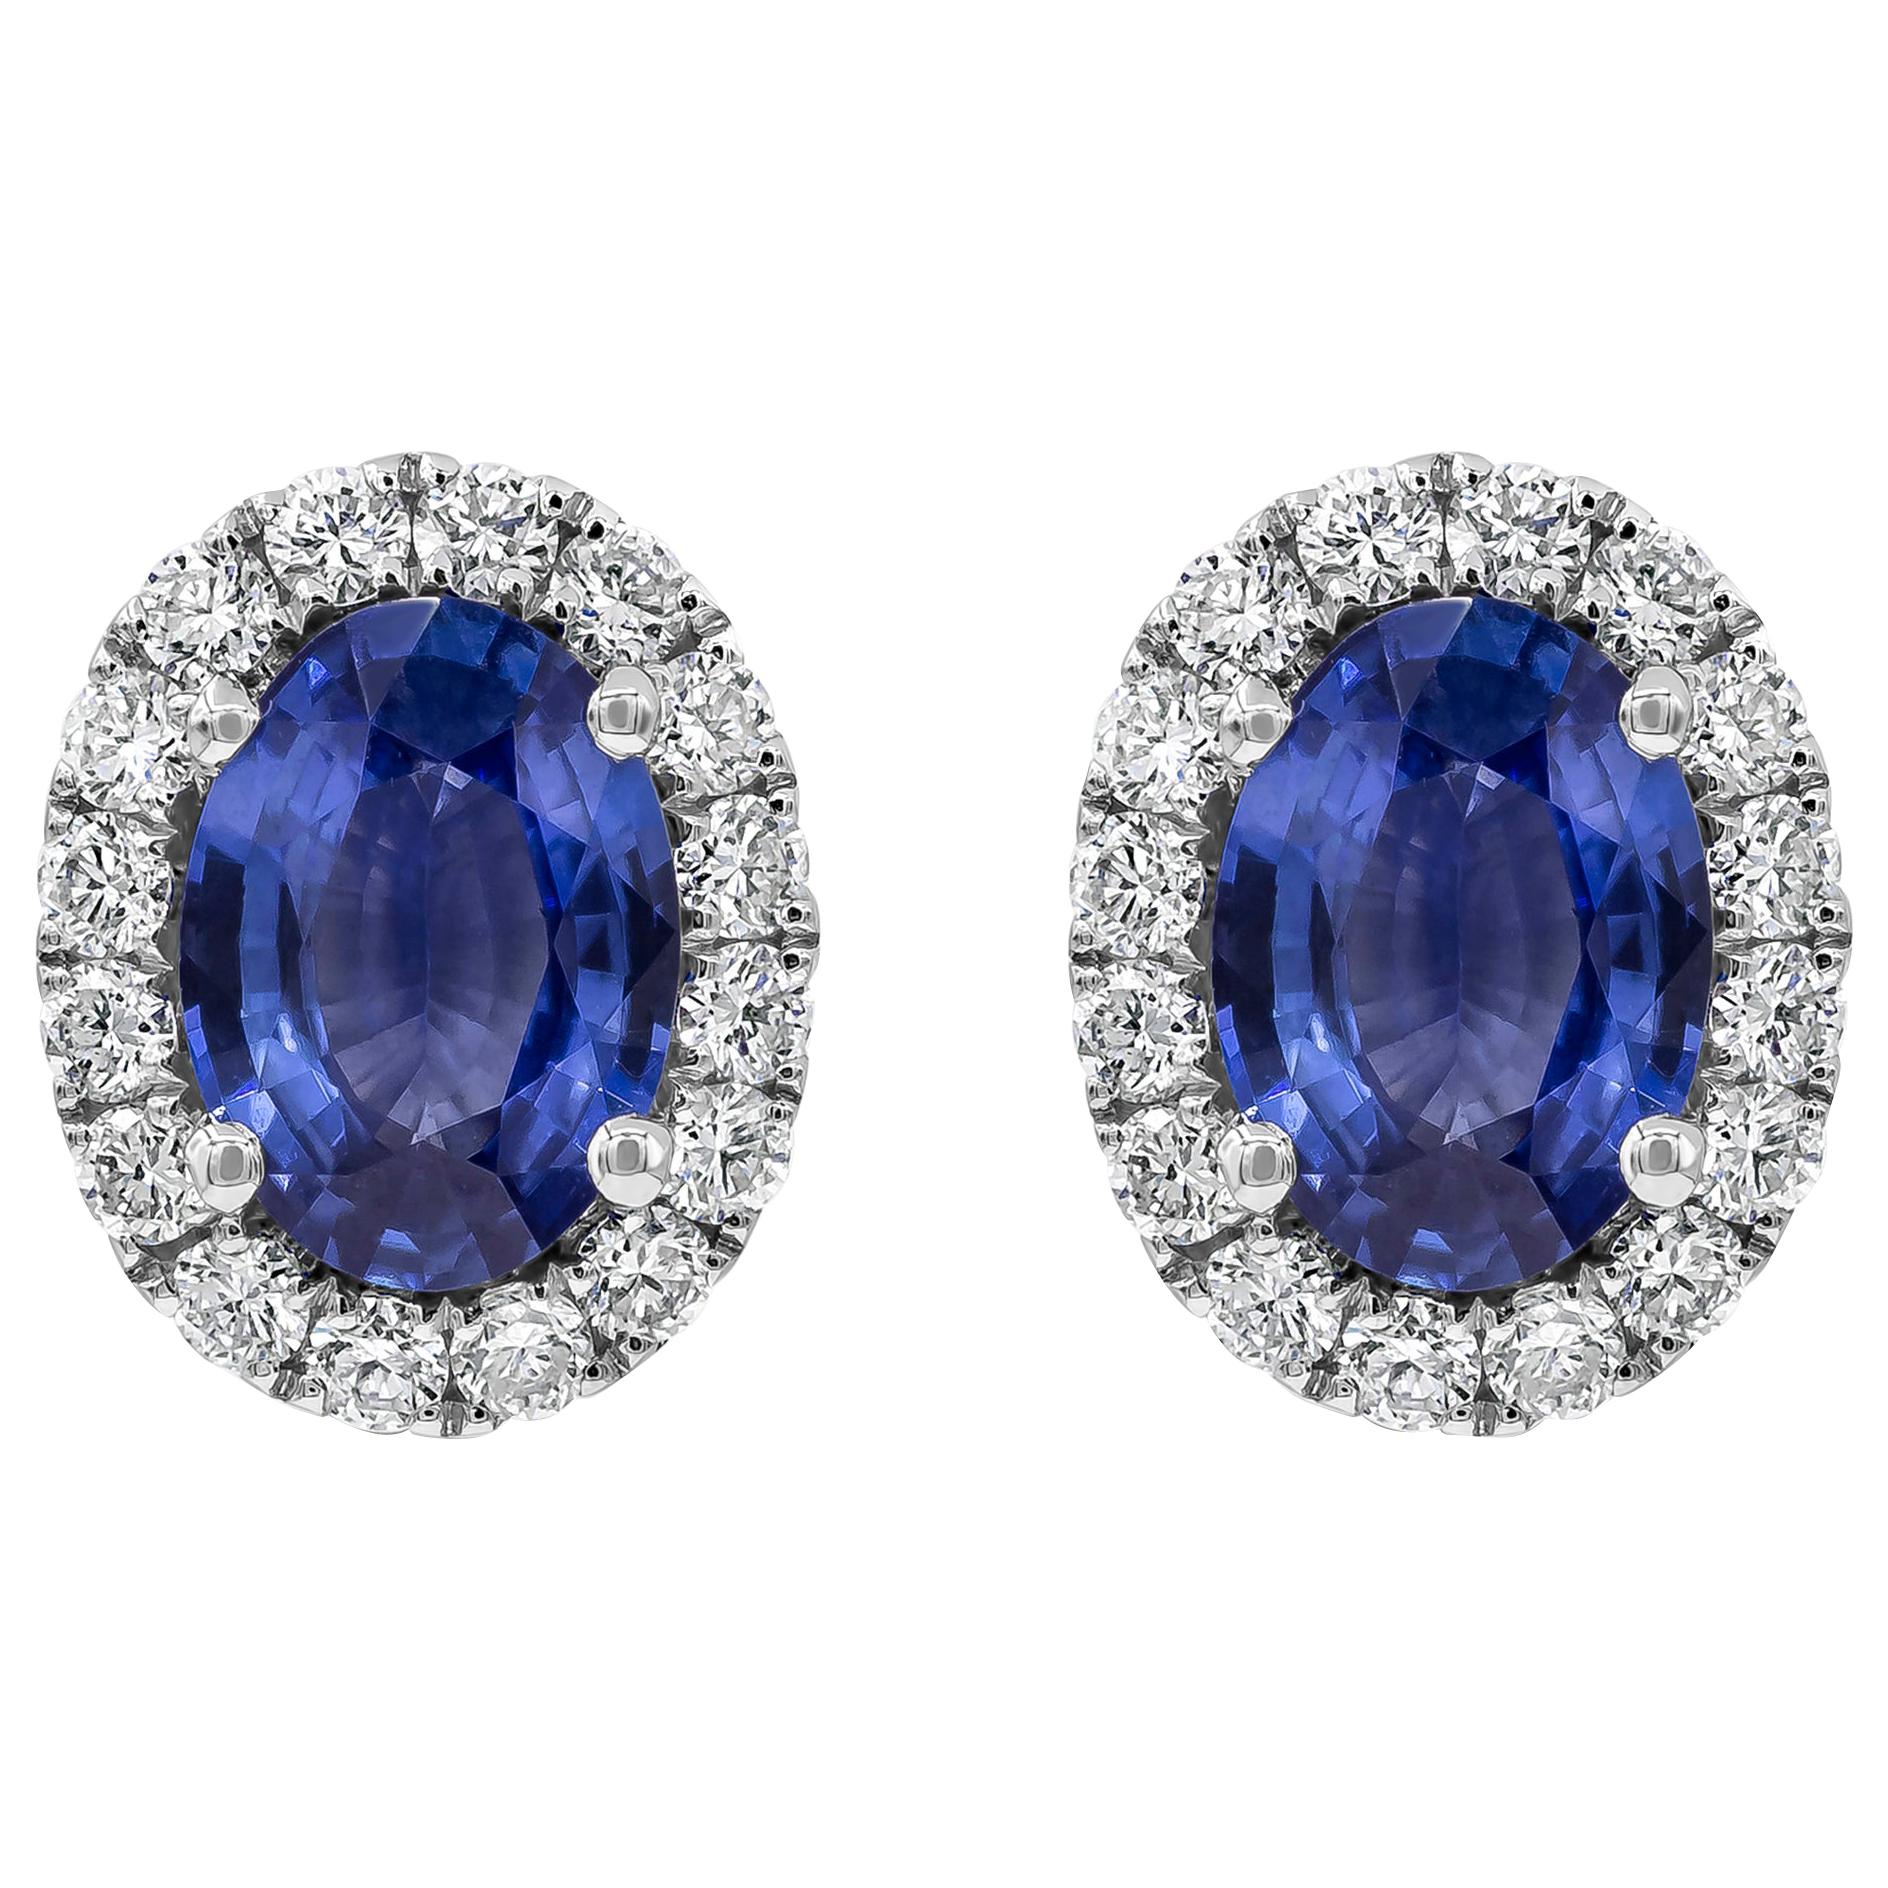 Roman Malakov 1.64 Carat Oval Cut Blue Sapphire and Diamond Halo Stud Earrings